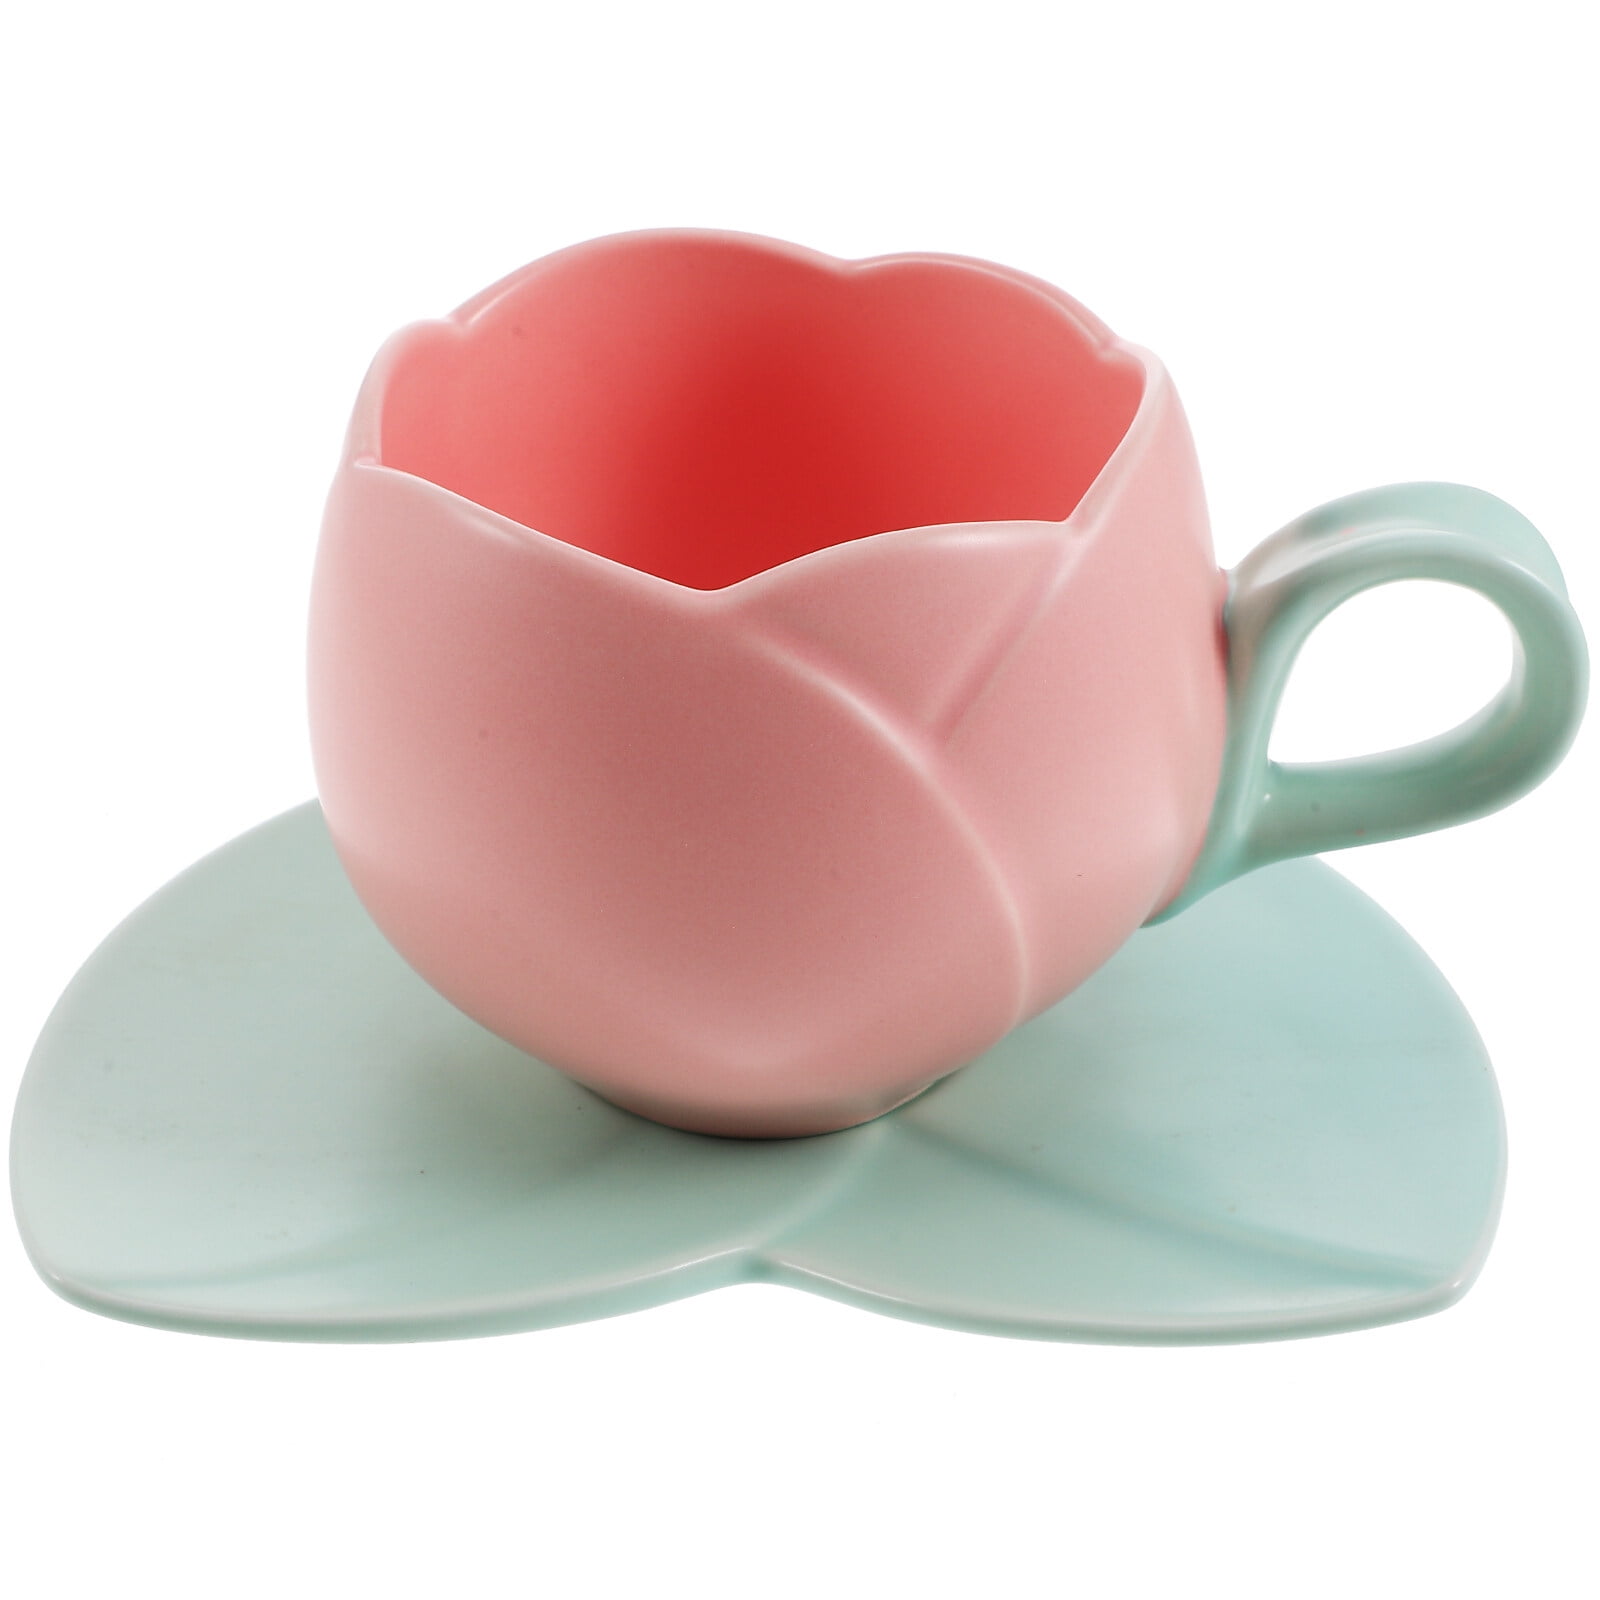 Paris Hilton Ceramic Coffee Mug, Large Coffee Cup with Gold Handle, 16  Ounces, Rainbow Hearts